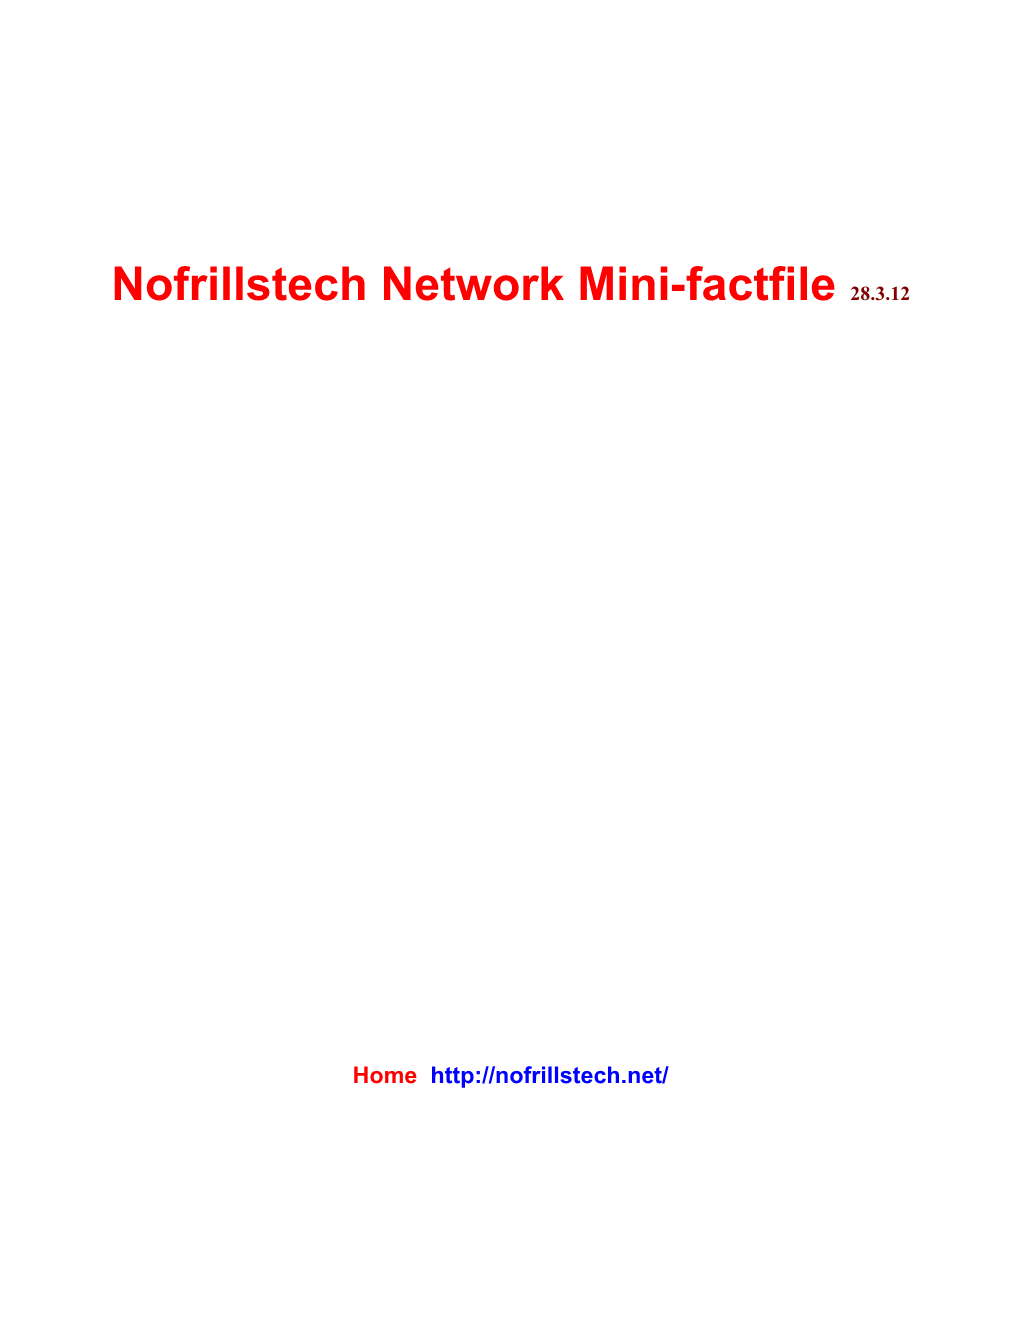 Nofrillstech Network Mini-Factfile 28.3.12